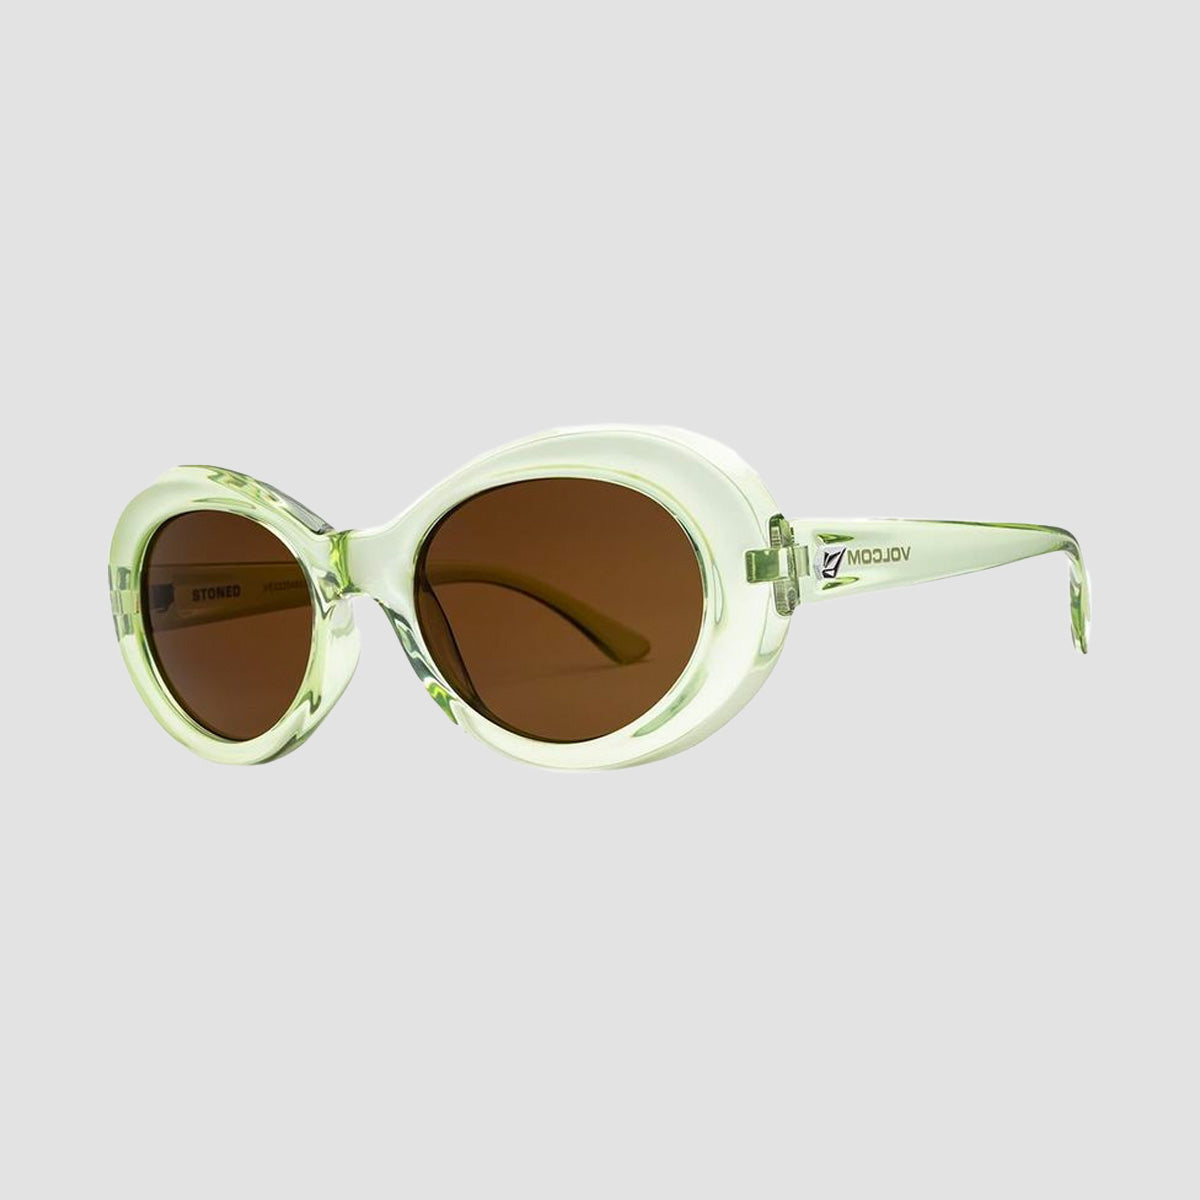 Volcom Stoned Sunglasses Gloss Sea Foam/Bronze - Unisex